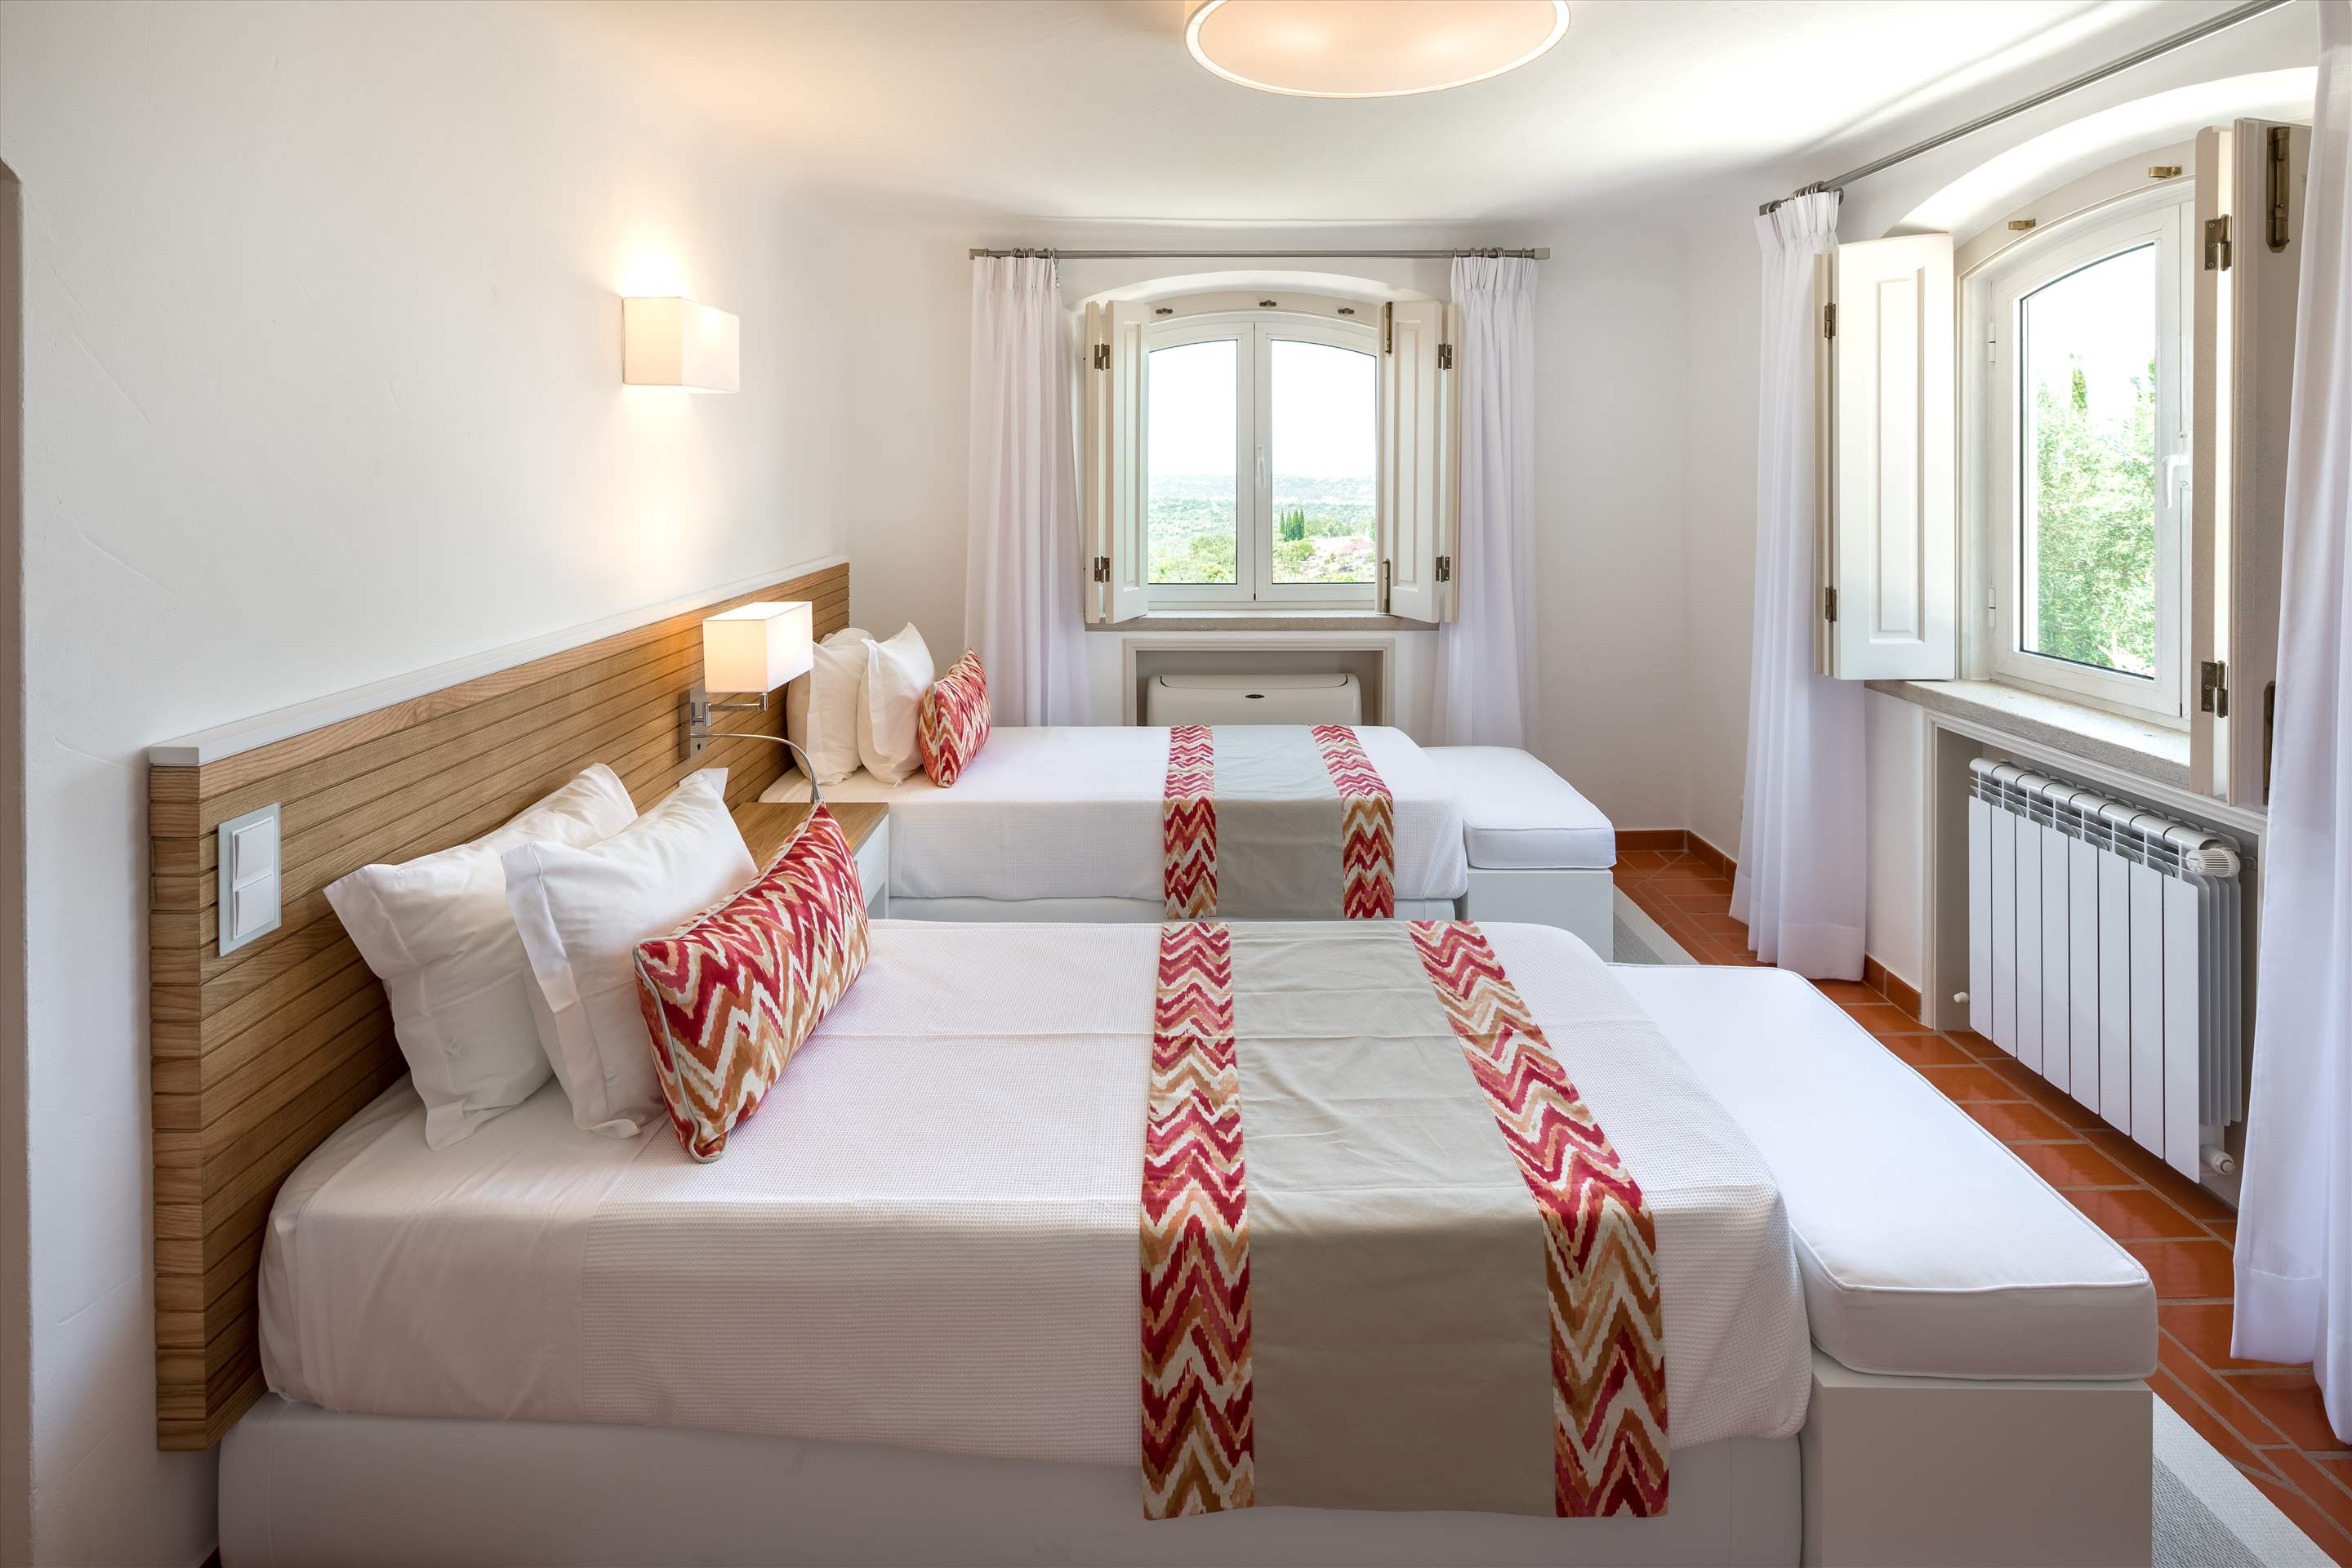 Casa da Montanha, 13-14 persons, 8 bedroom villa in Vilamoura Area, Algarve Photo #25